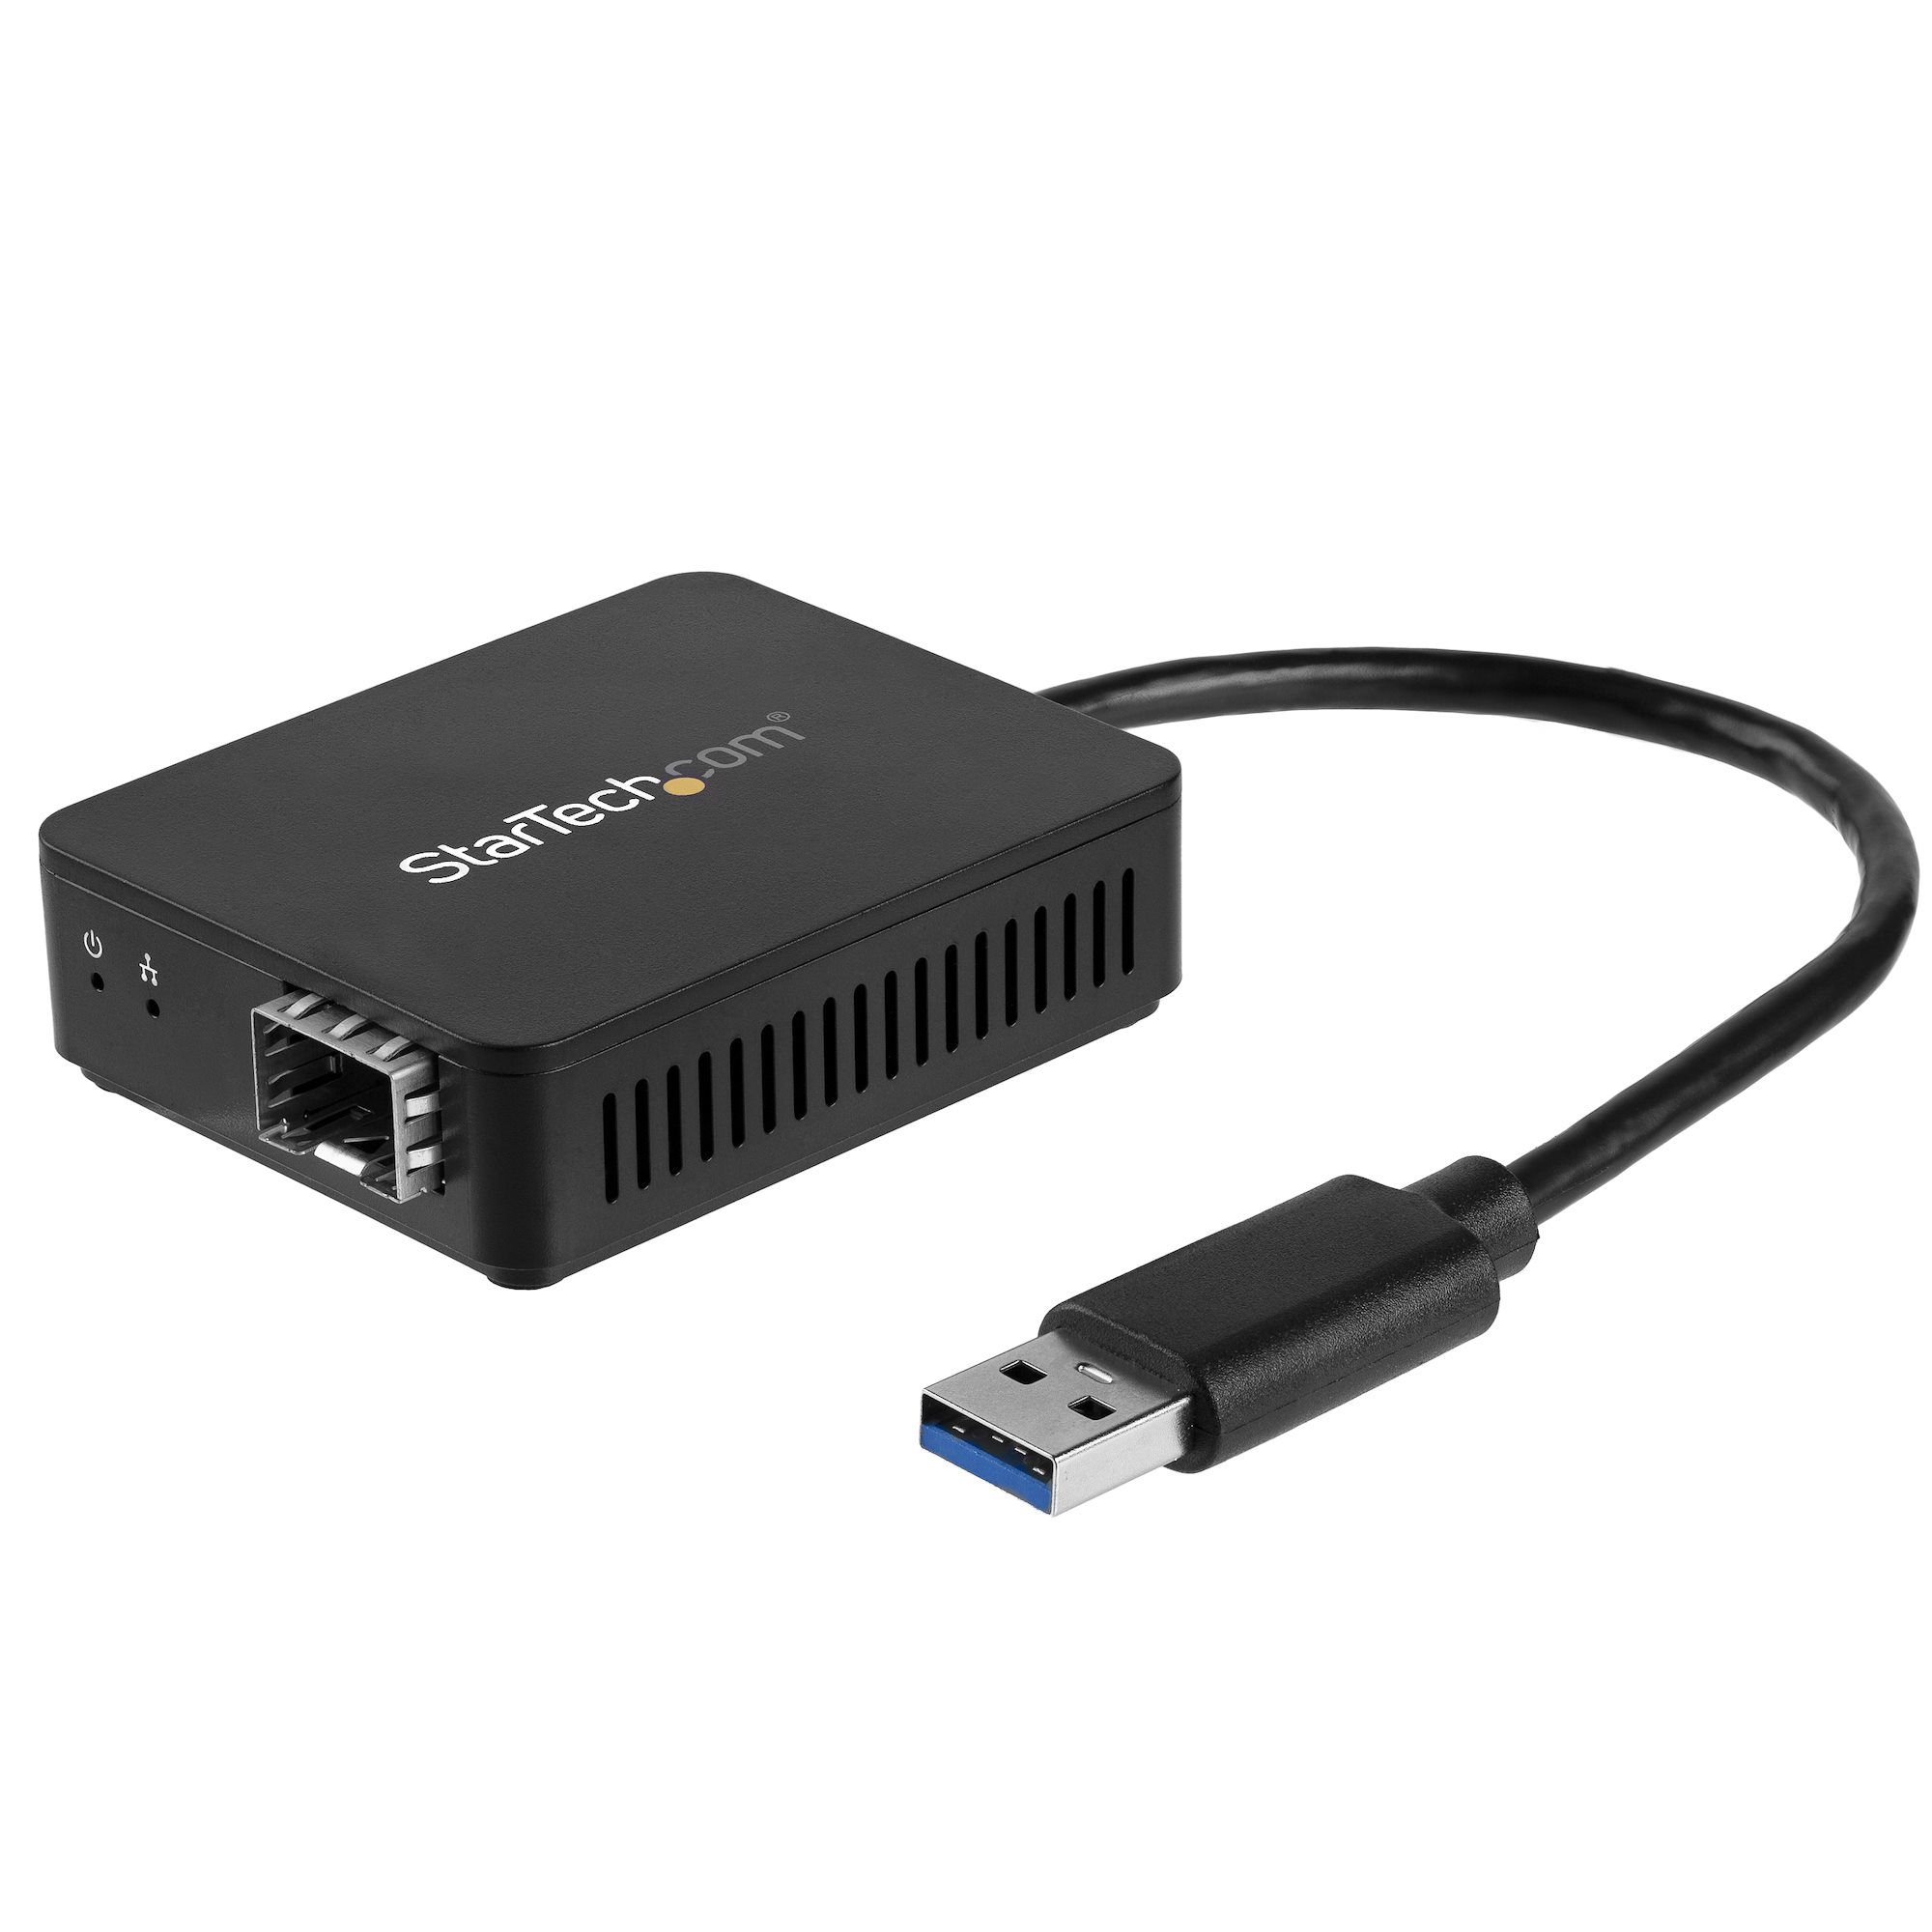 StarTech.com USB 3.0 to Fiber Optic Converter, Compact USB to Open SFP Adapter, USB to Gigabit Network Adapter, USB 3.0 Fiber Adapter Multi Mode(MMF)/Single Mode Fiber (SMF) Compatible - USB Ethernet adapter (US1GA30SFP) - Network adapter - USB 3.0 - 1000